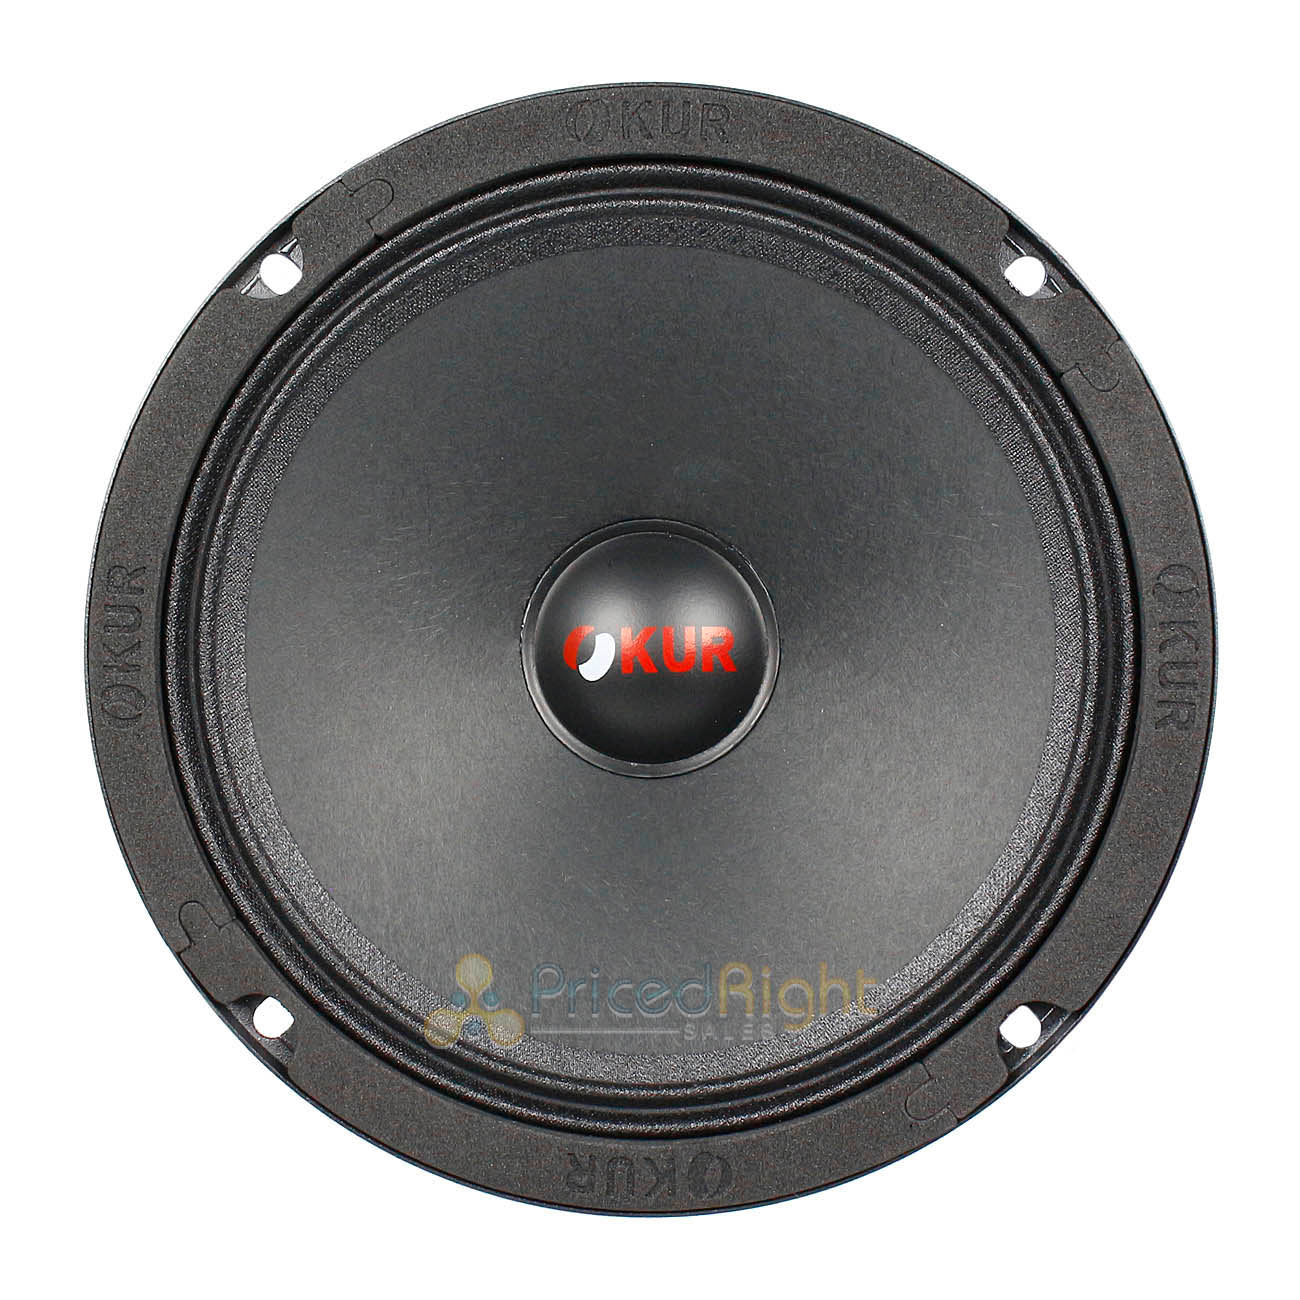 OKUR 6.5" Midrange Speaker Pair Pro Audio 4 Ohm 350 Watts Max Power OMR65PR